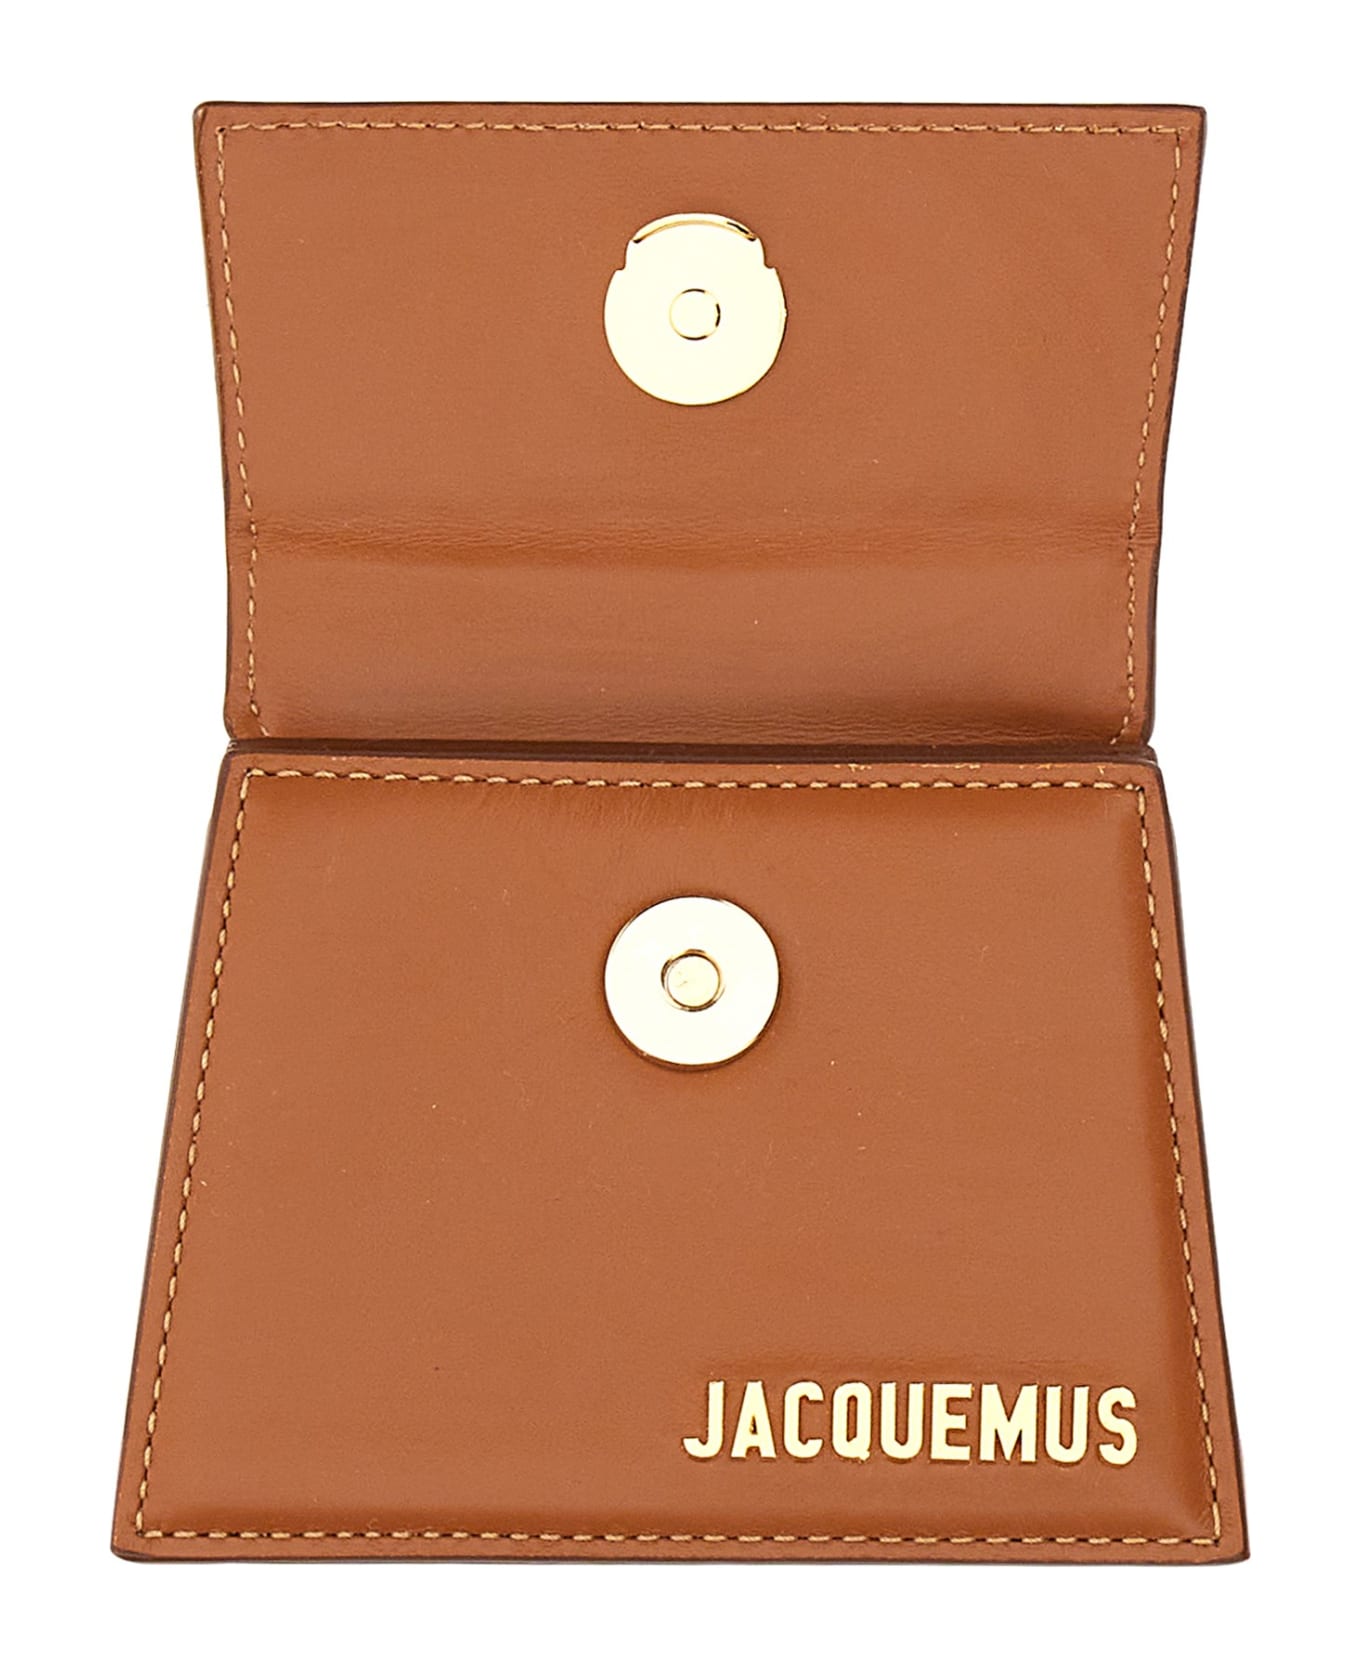 Jacquemus Le Chiquito Bag - BUFF